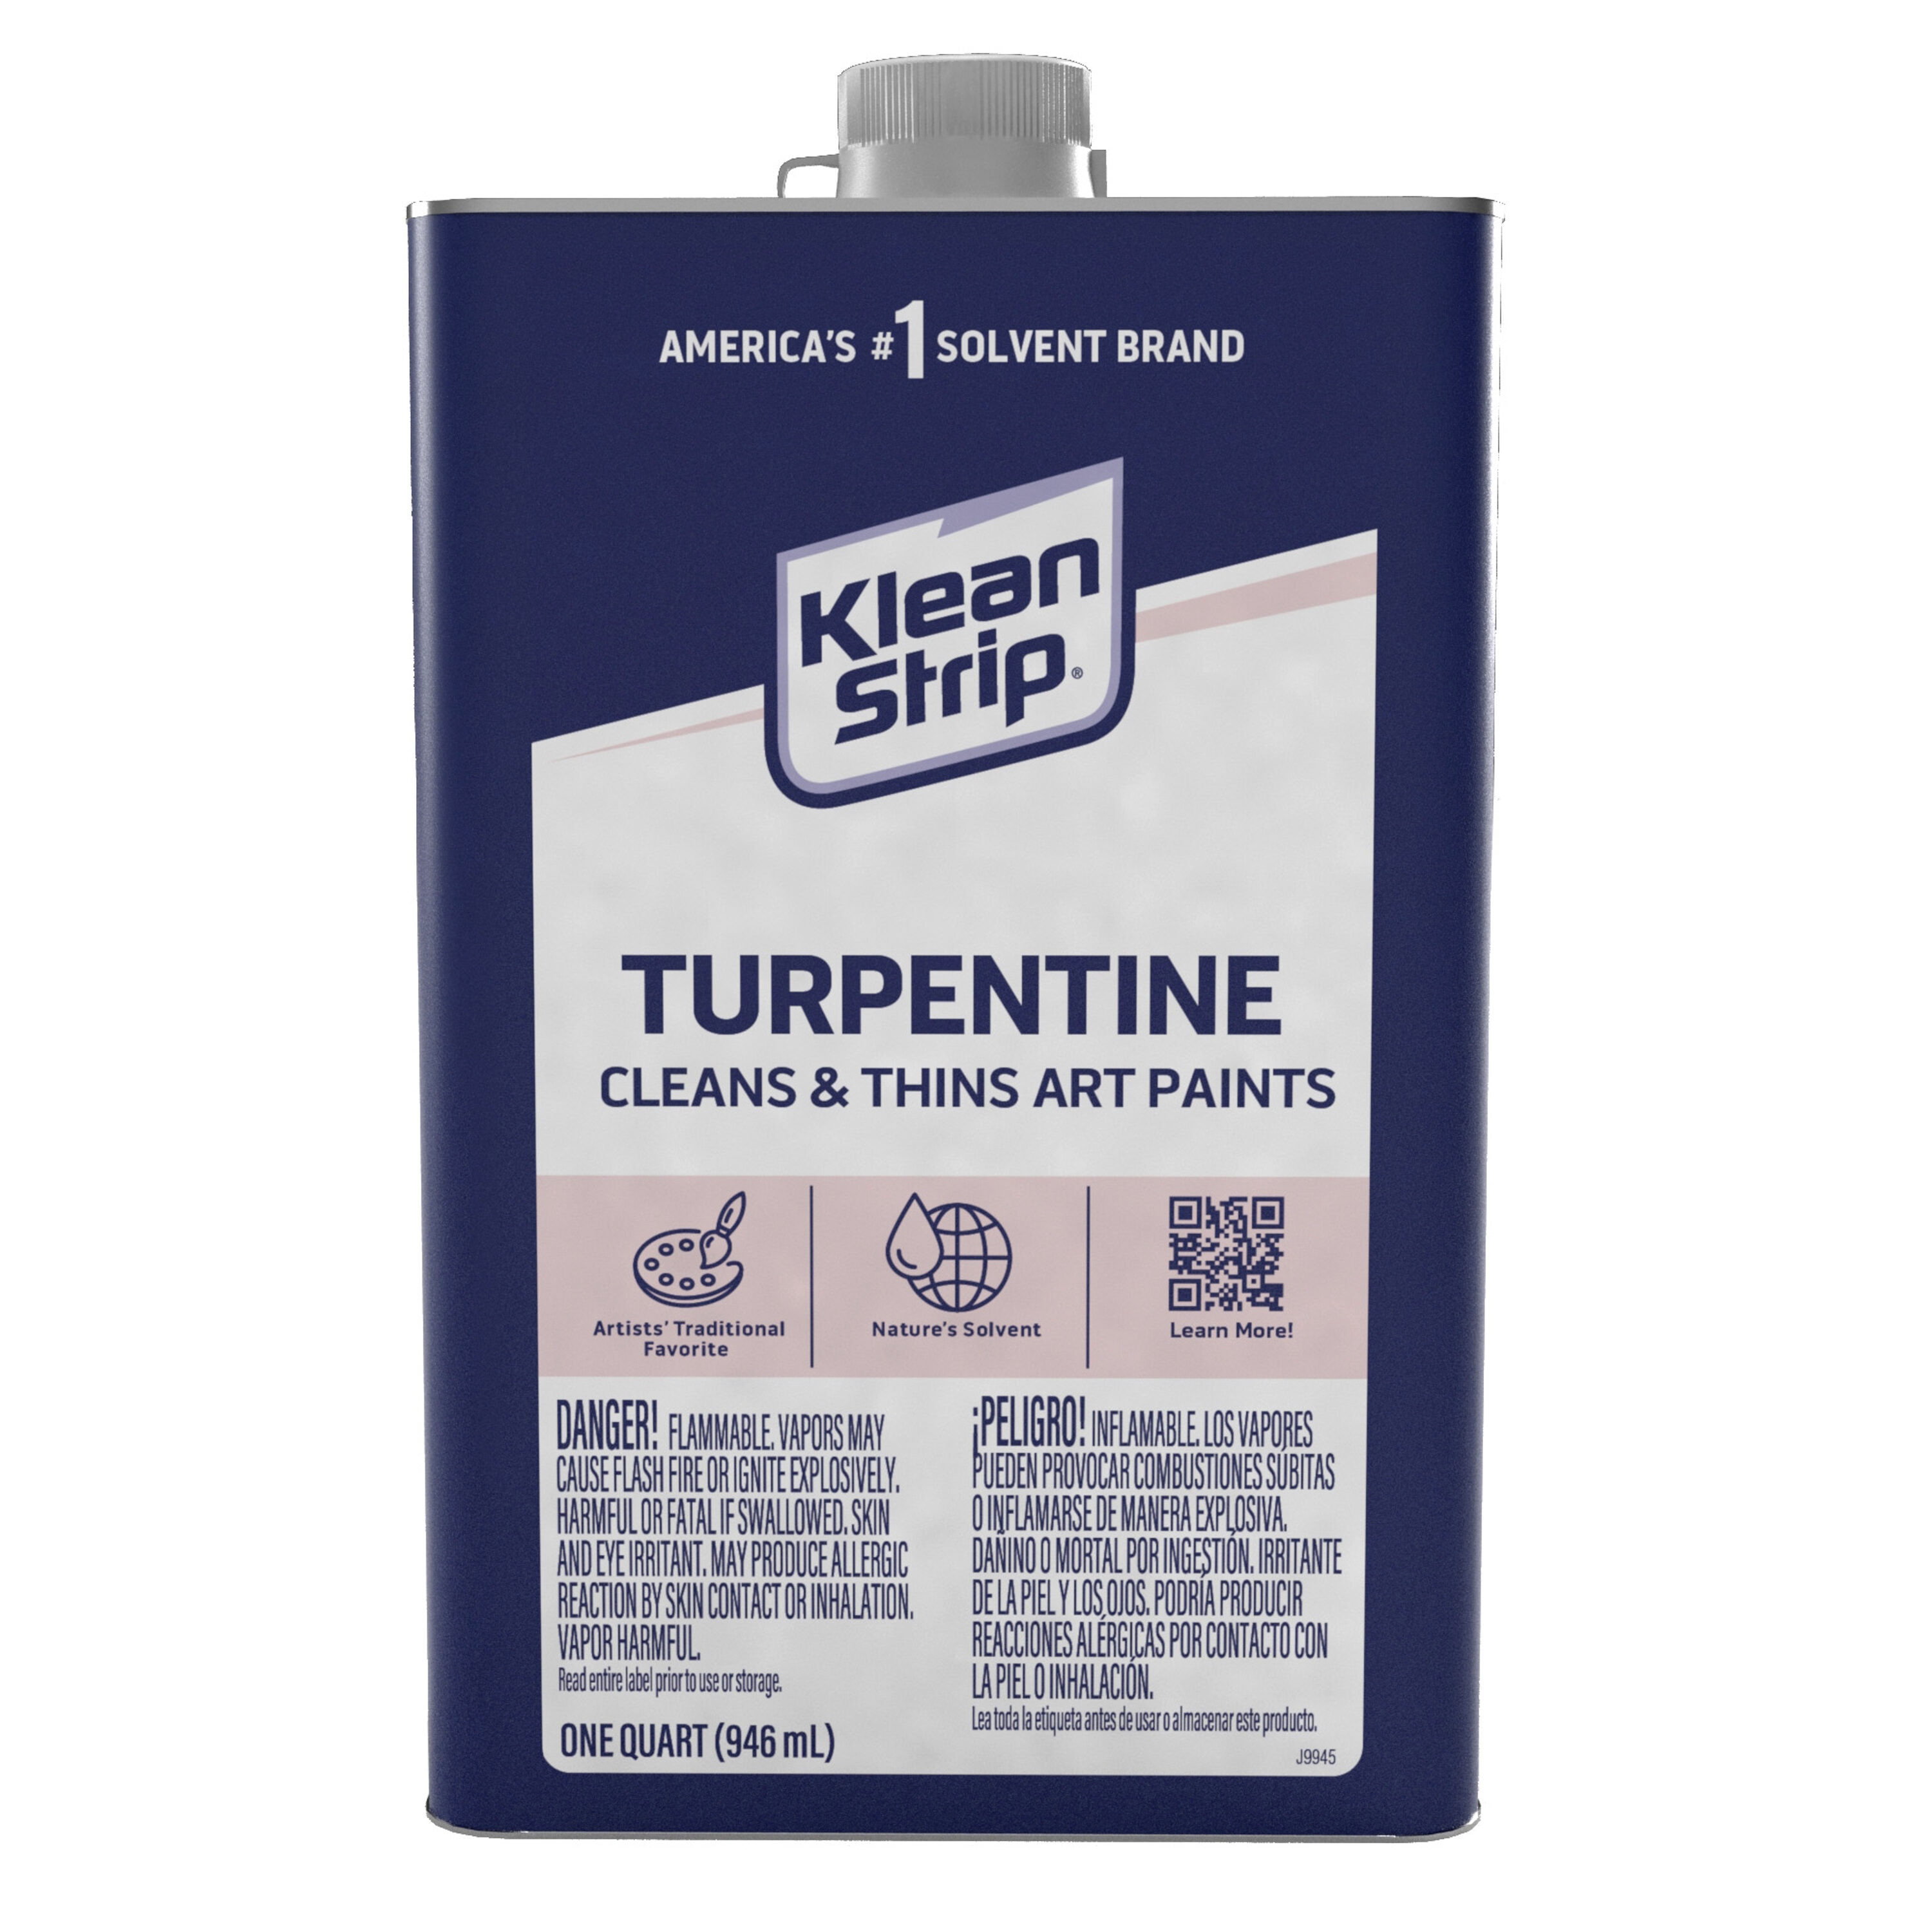 Turpentine - Jasco Help